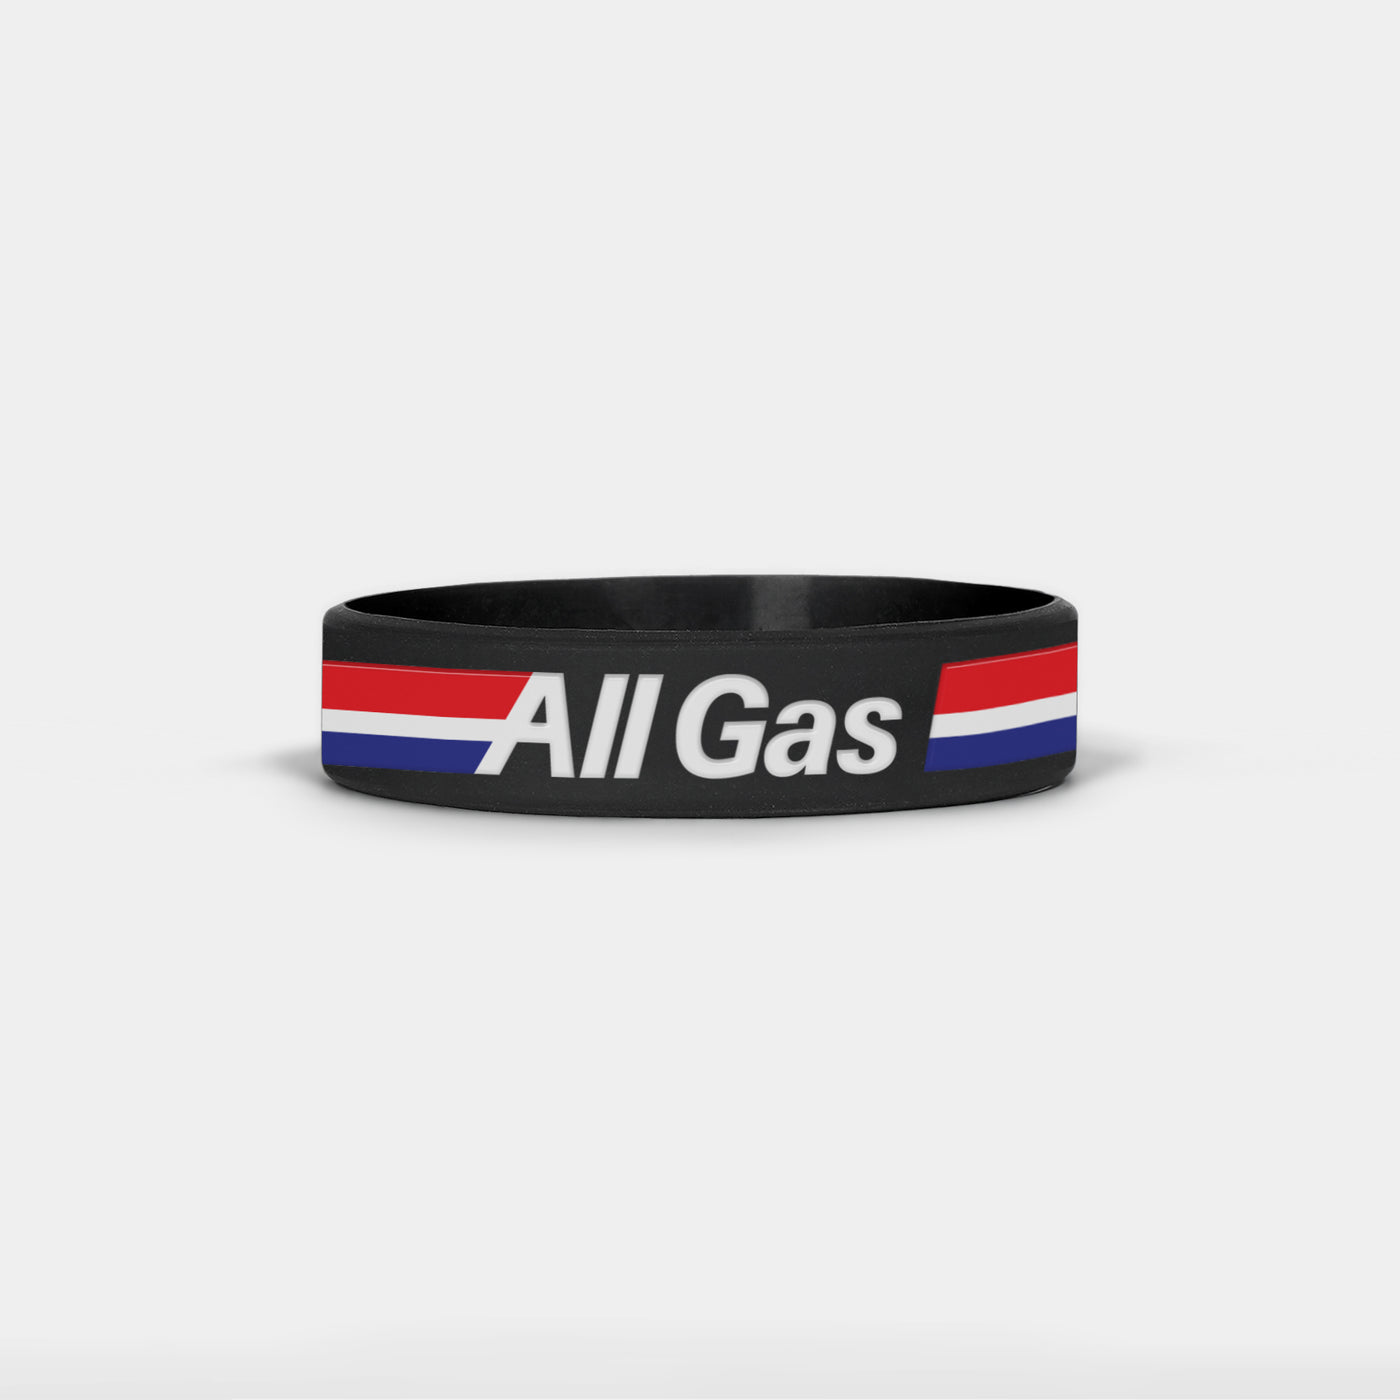 All Gas Kids Motivational Wristband